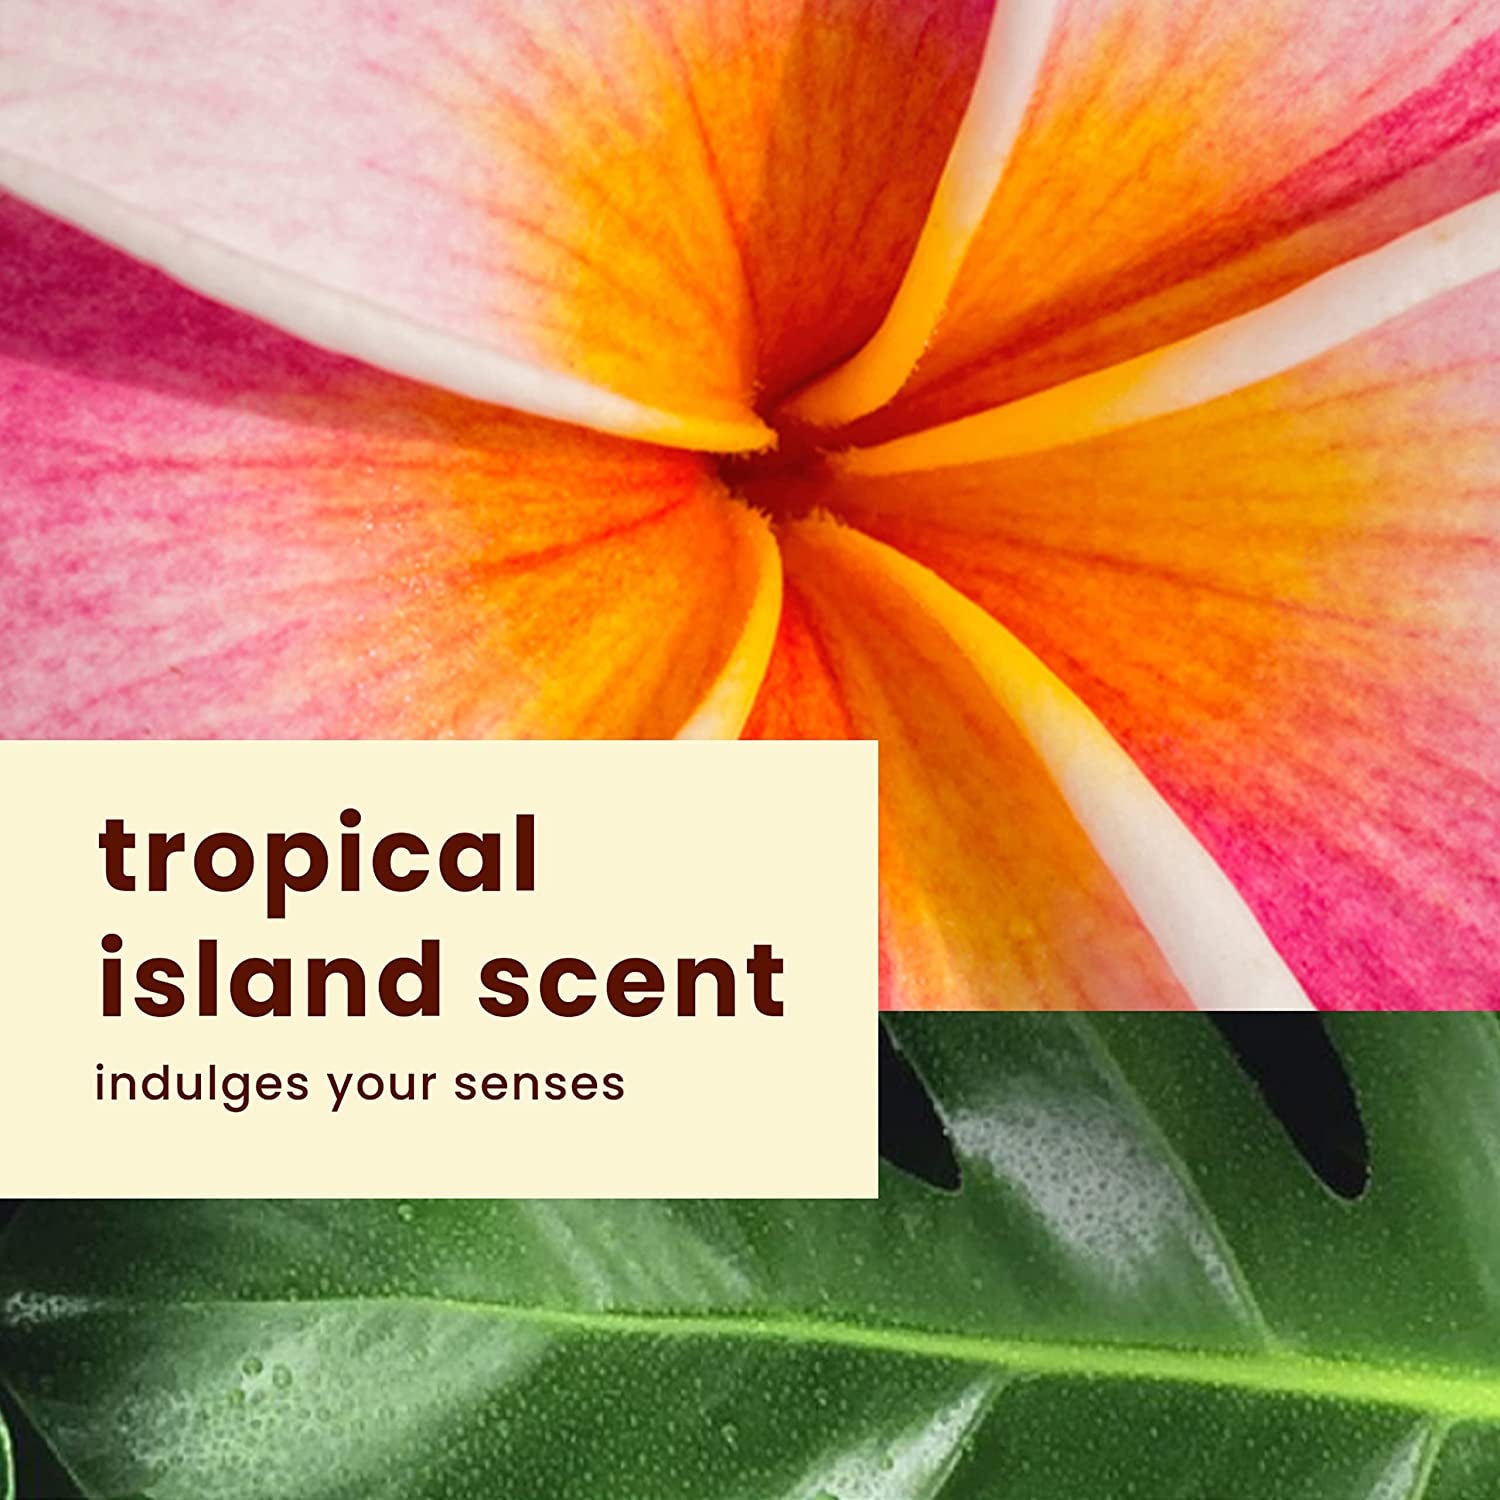 "Radiant Glow Hawaiian Tropic Sheer Touch Sunscreen SPF 30 - 8oz"